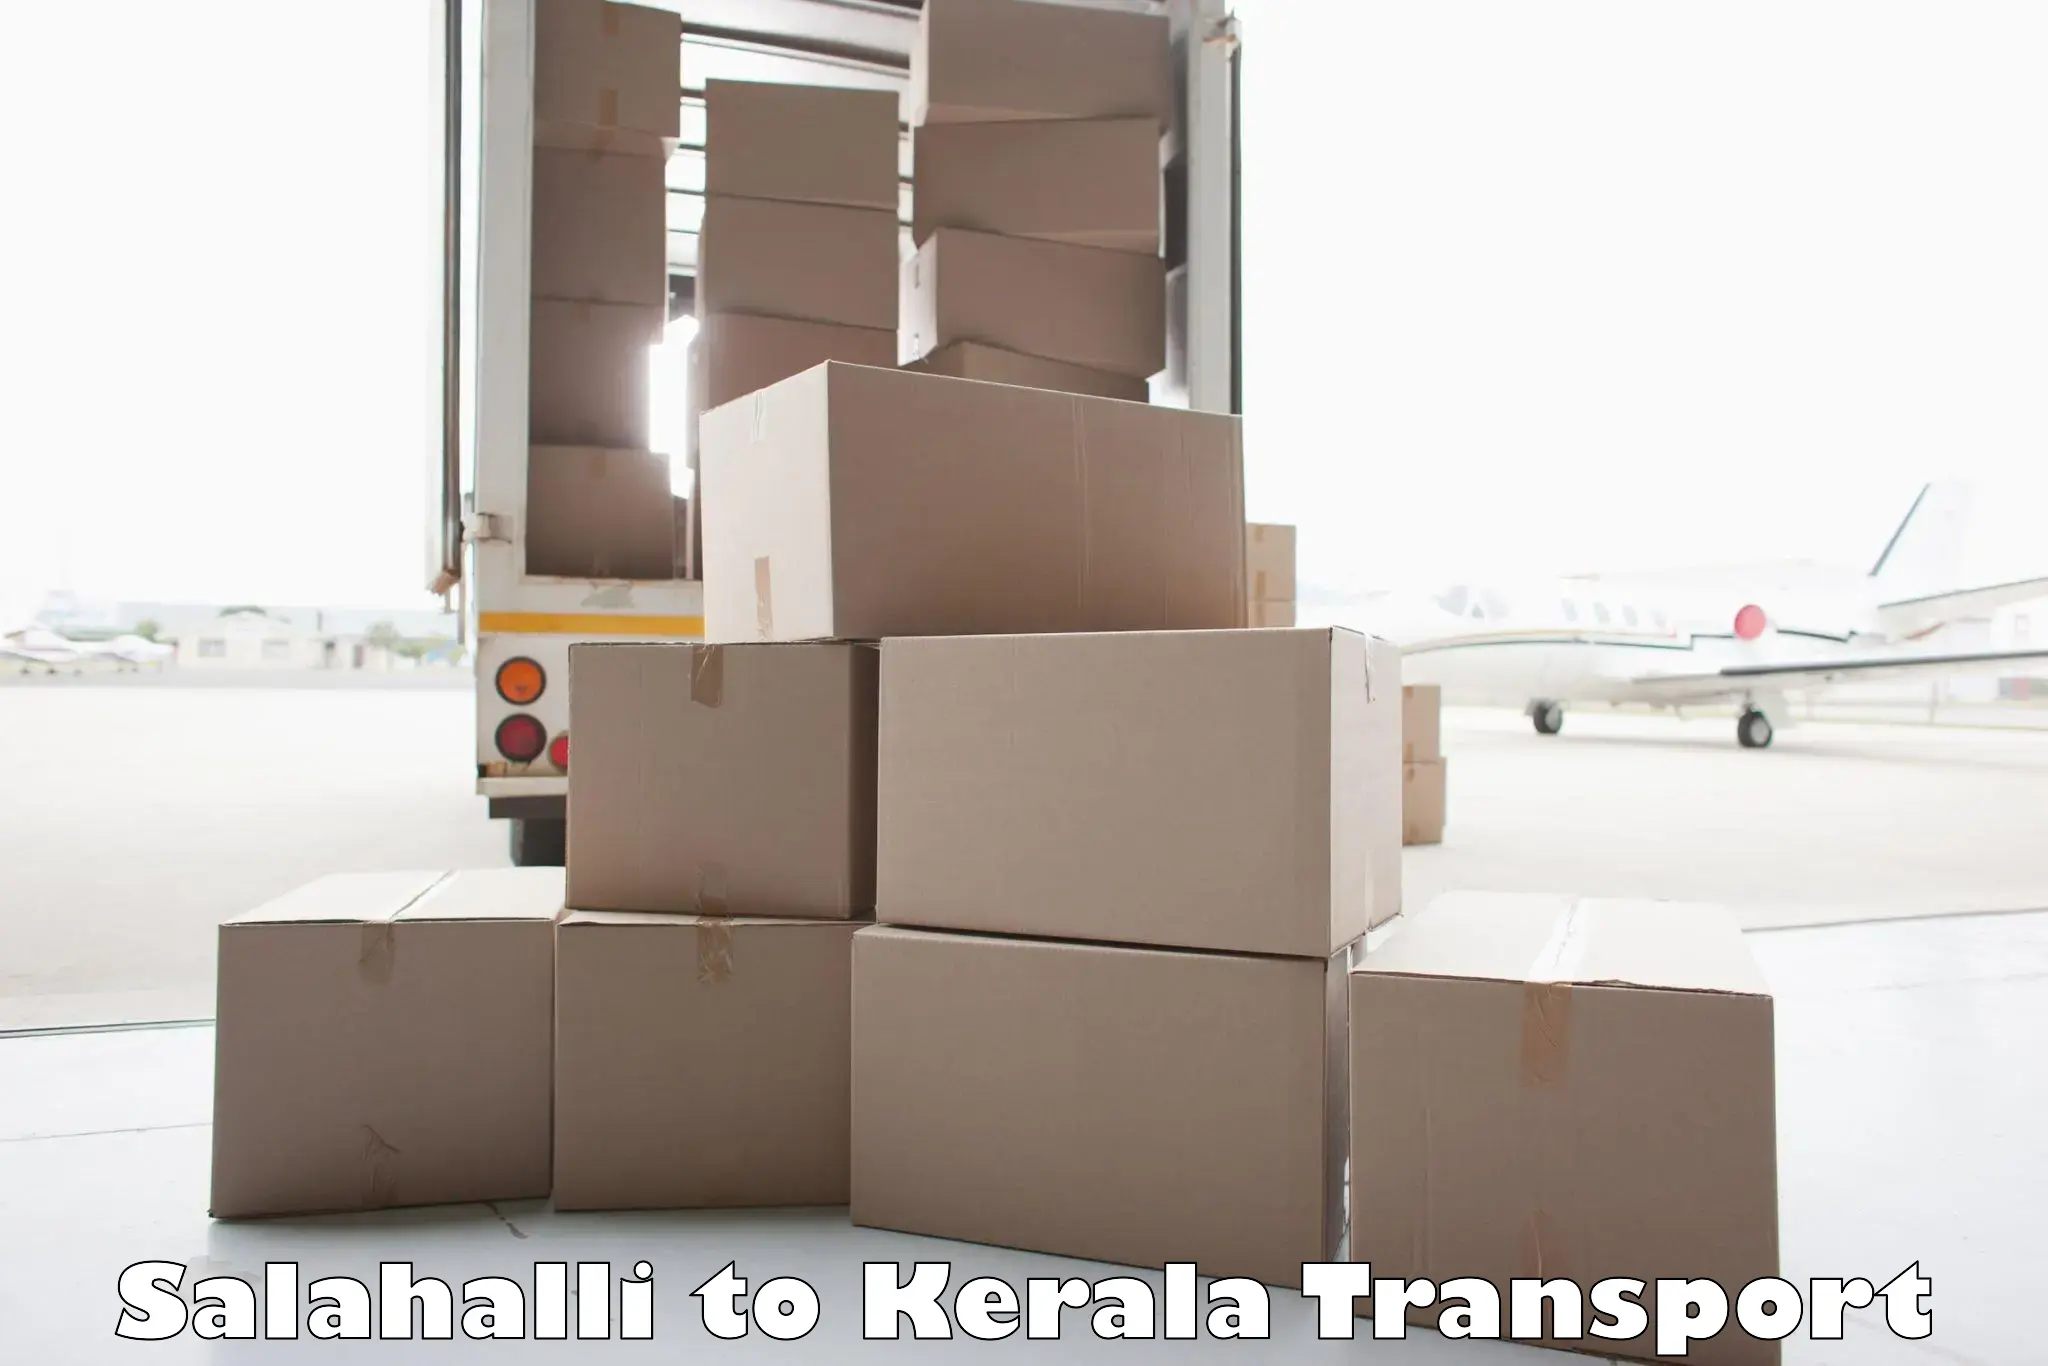 Truck transport companies in India Salahalli to Karimba